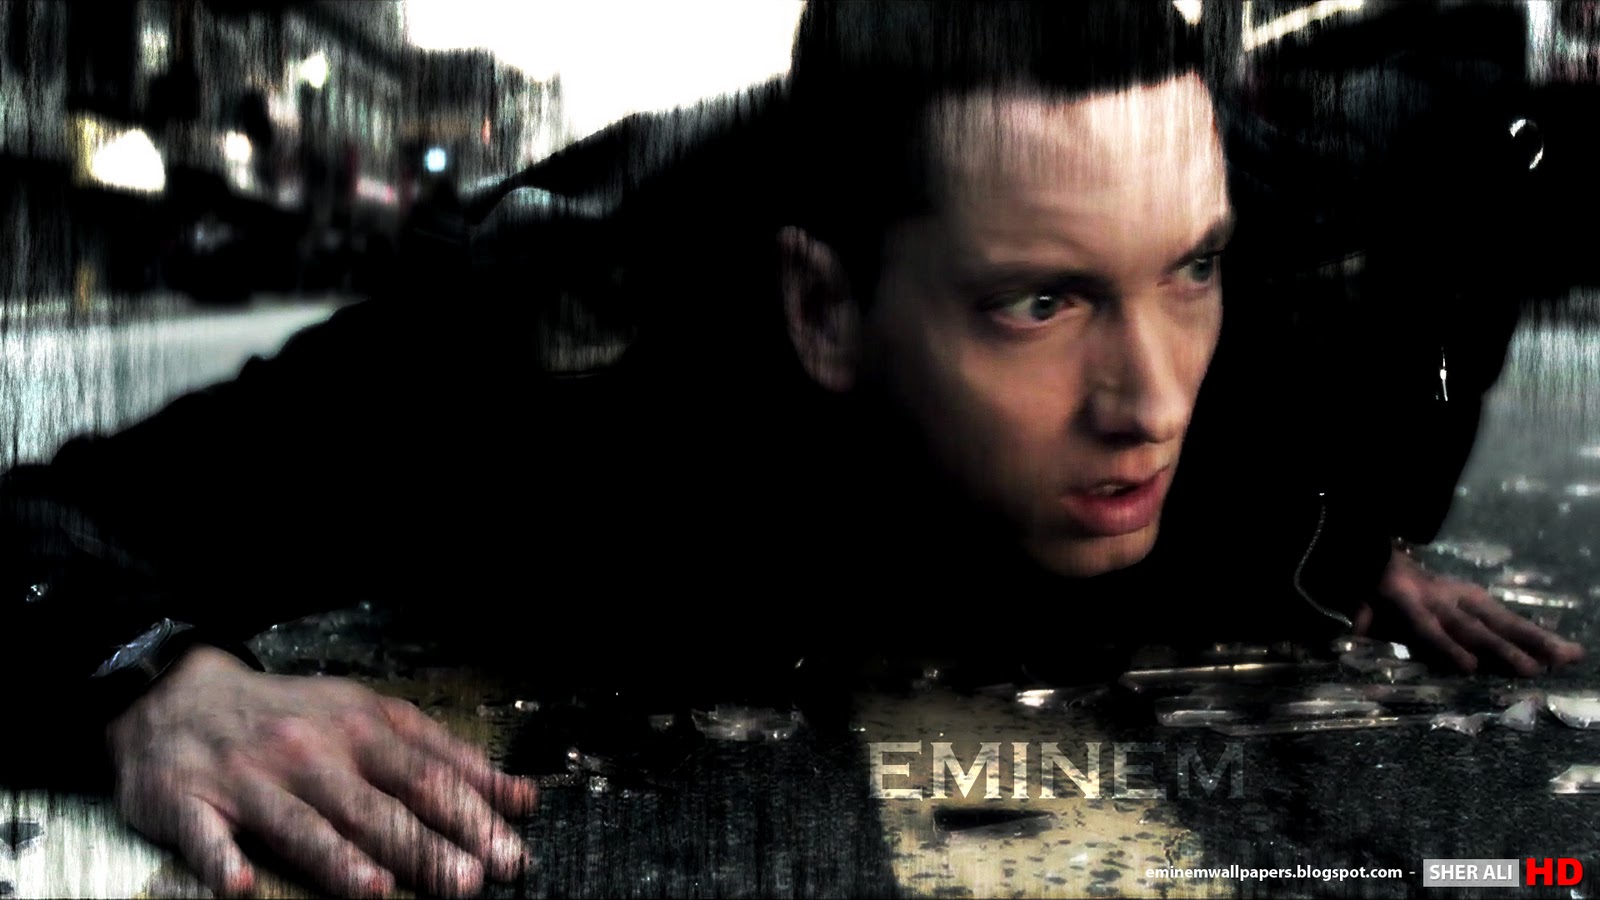 Eminem Wallpaper New HD 1080i